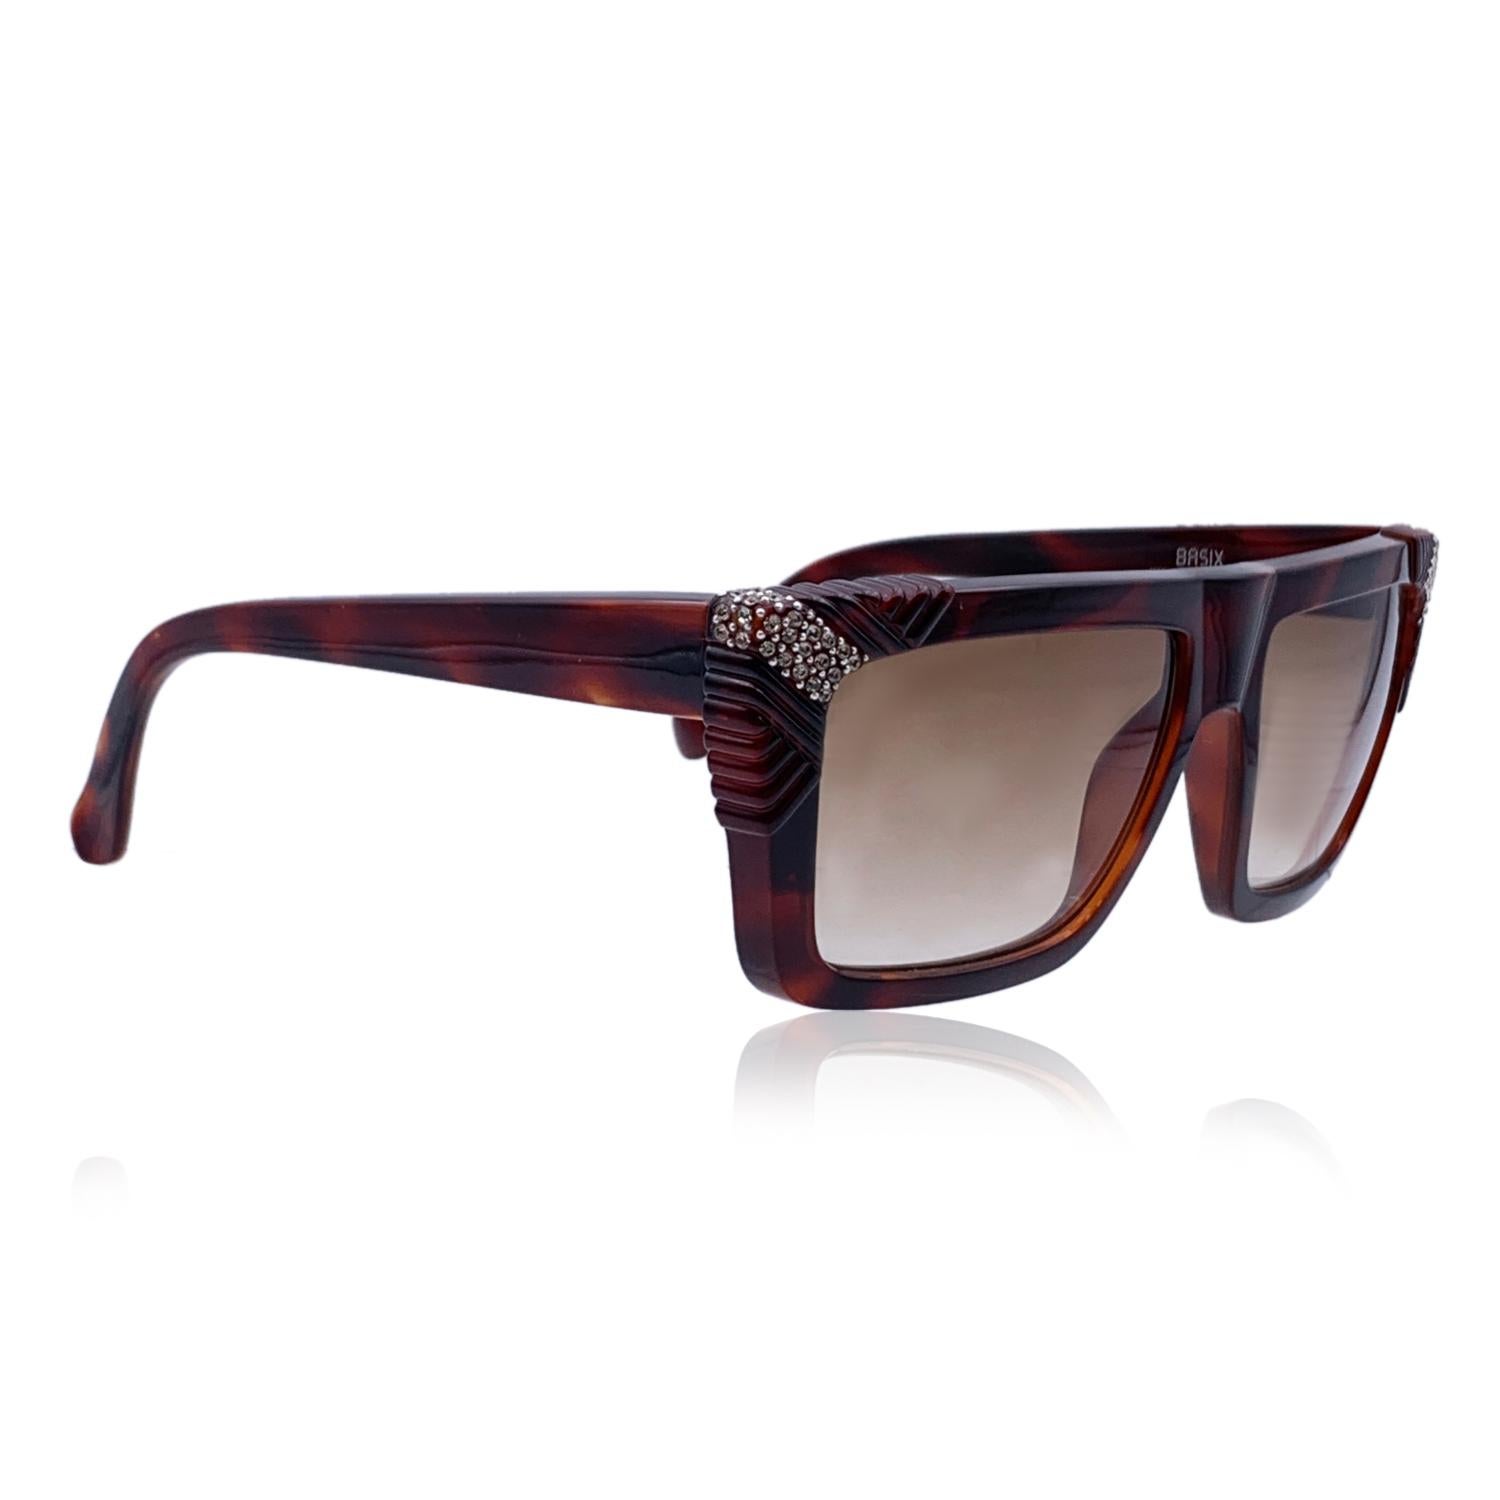 Women's Gianni Versace Vintage Brown Sunglasses Mod. Basix 812 Col.688 For Sale